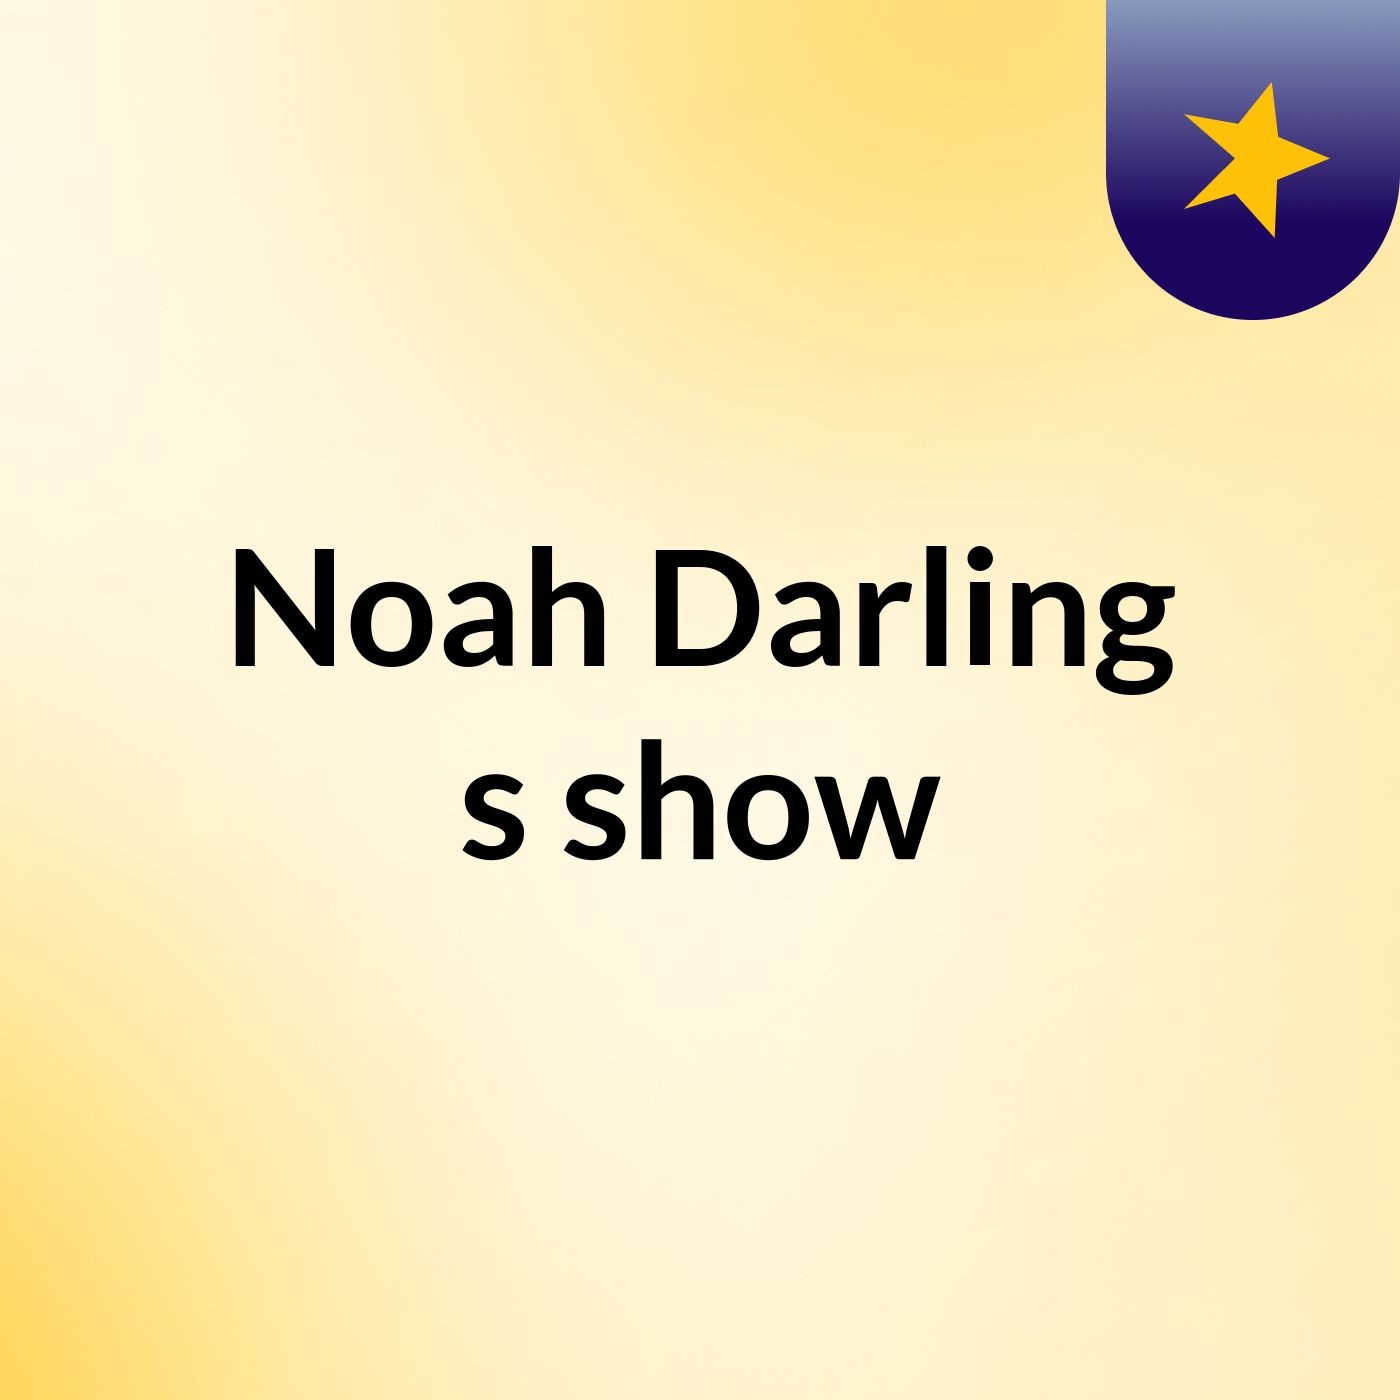 Noah Darling's show